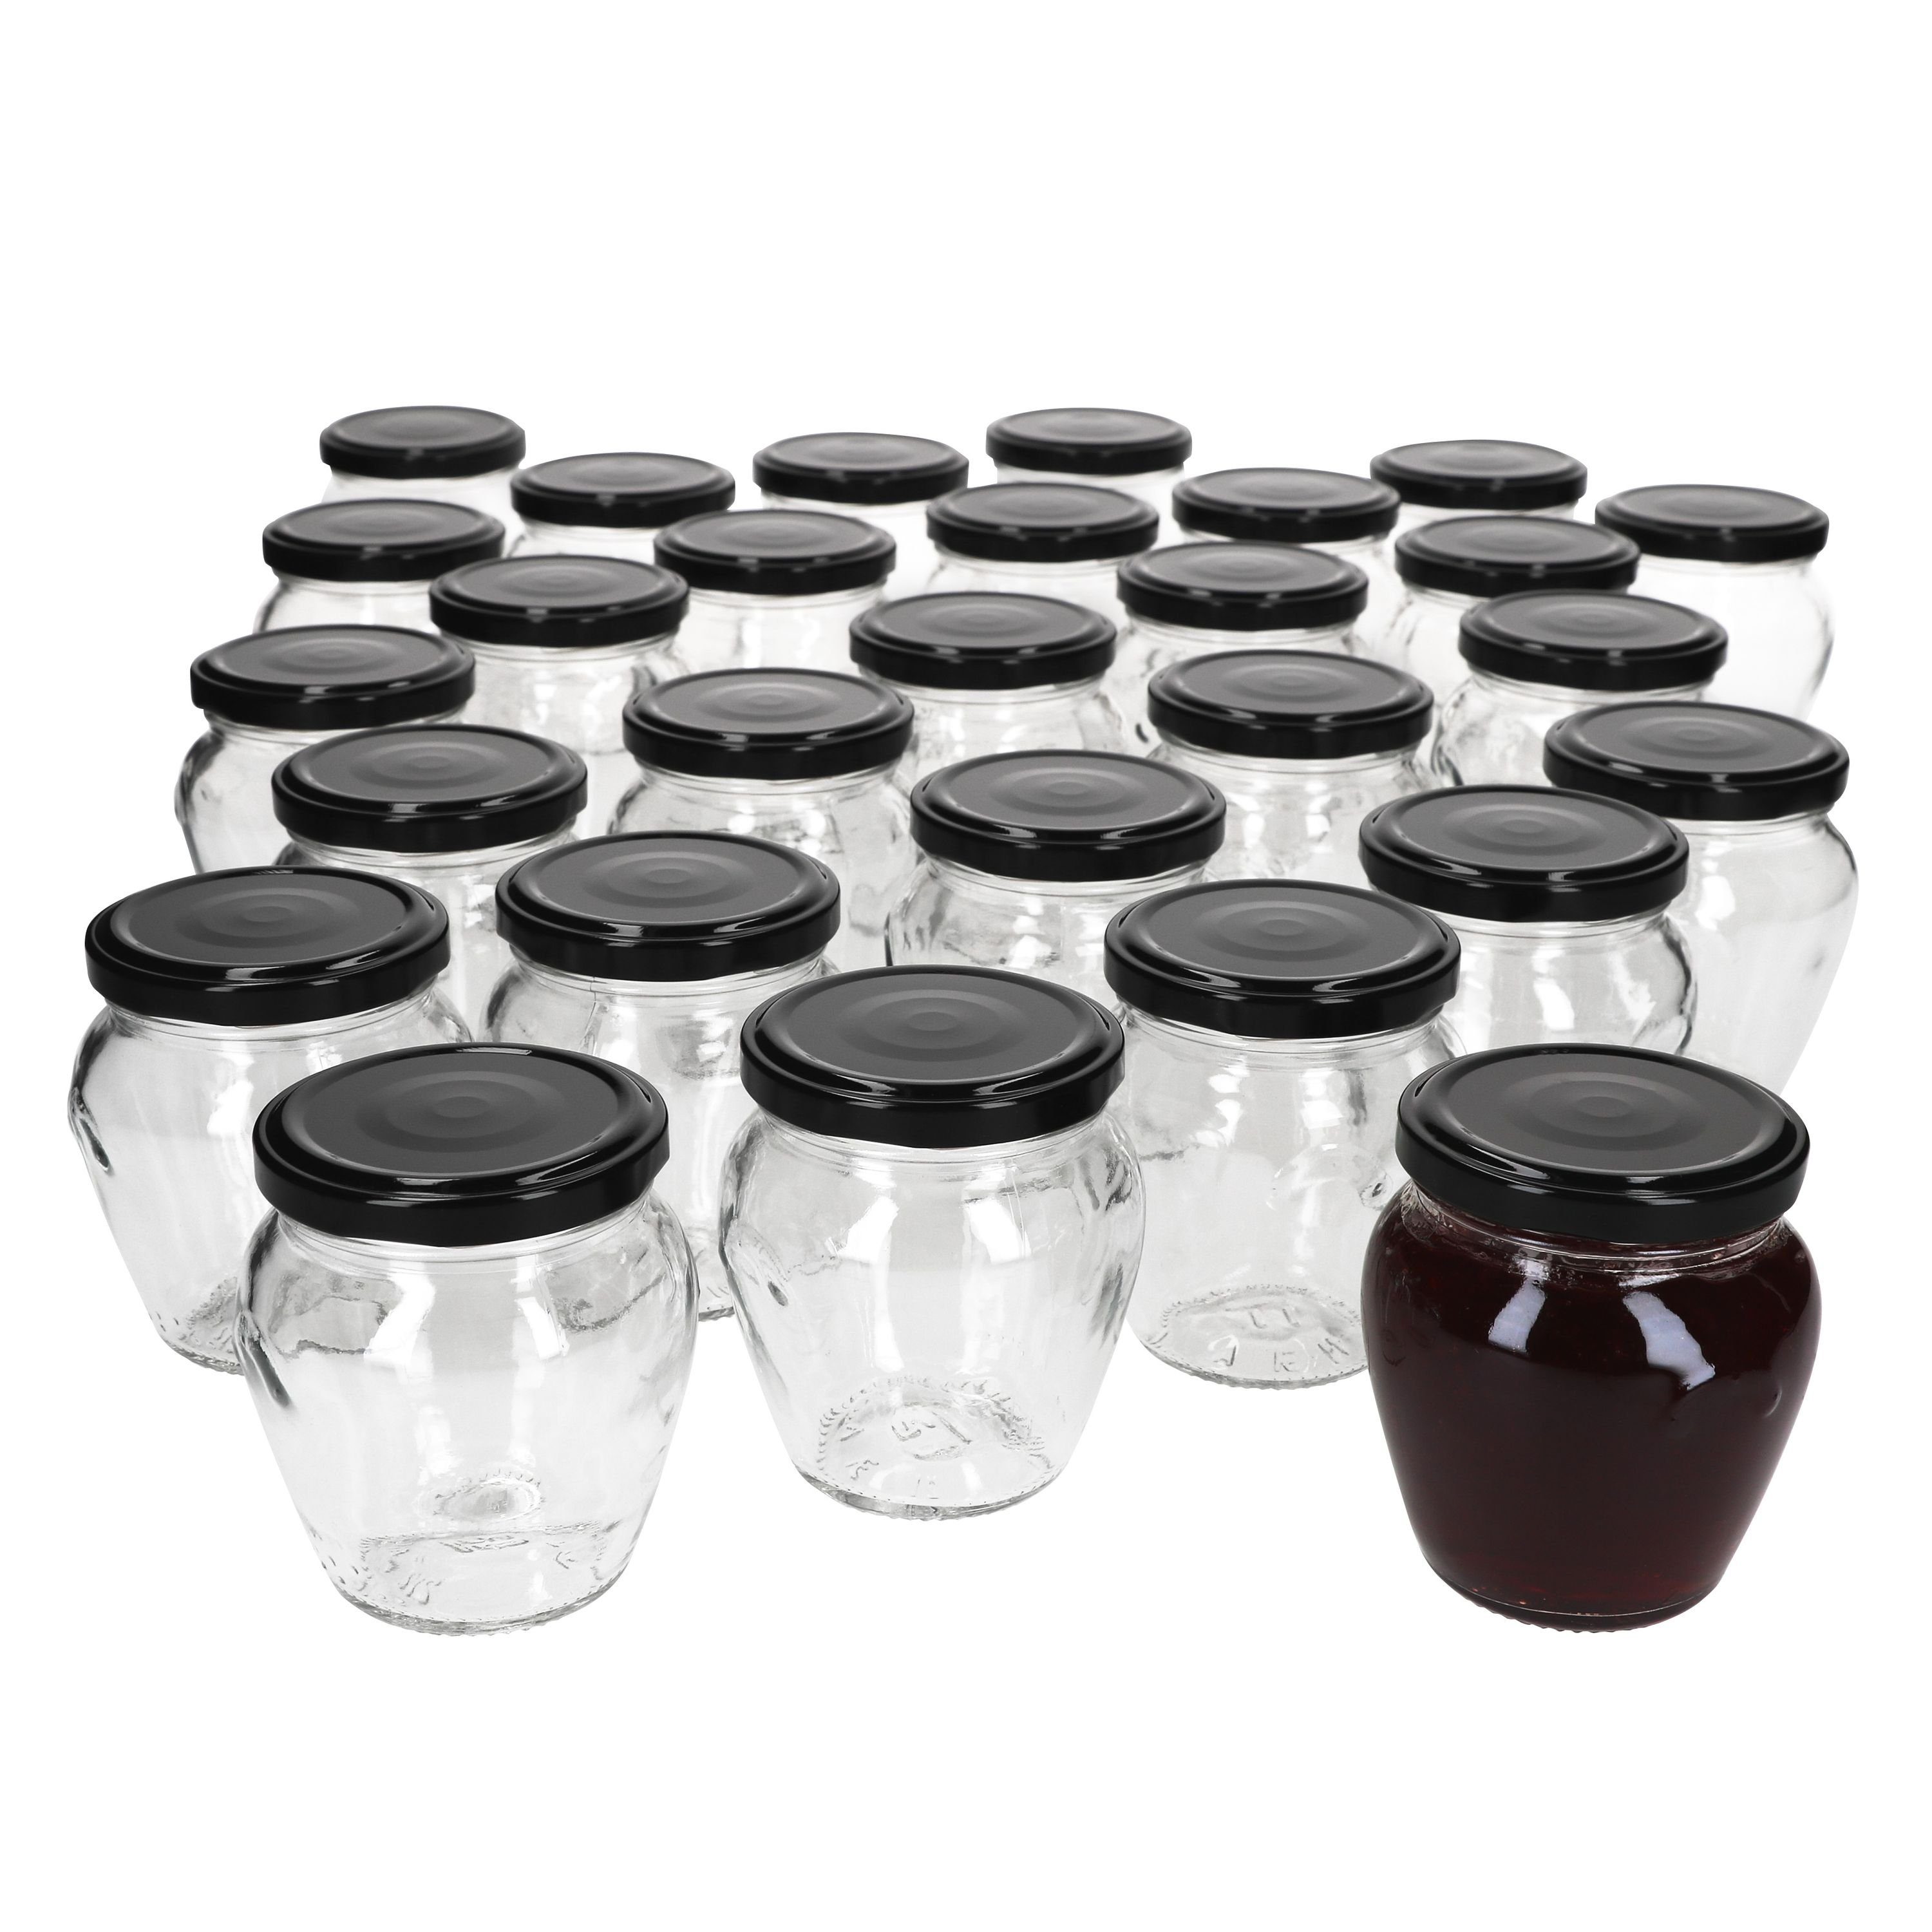 MamboCat Vorratsglas 75er Set Marmeladenglas Vaso Orcio 212ml + To63 Deckel Schwarz, Glas